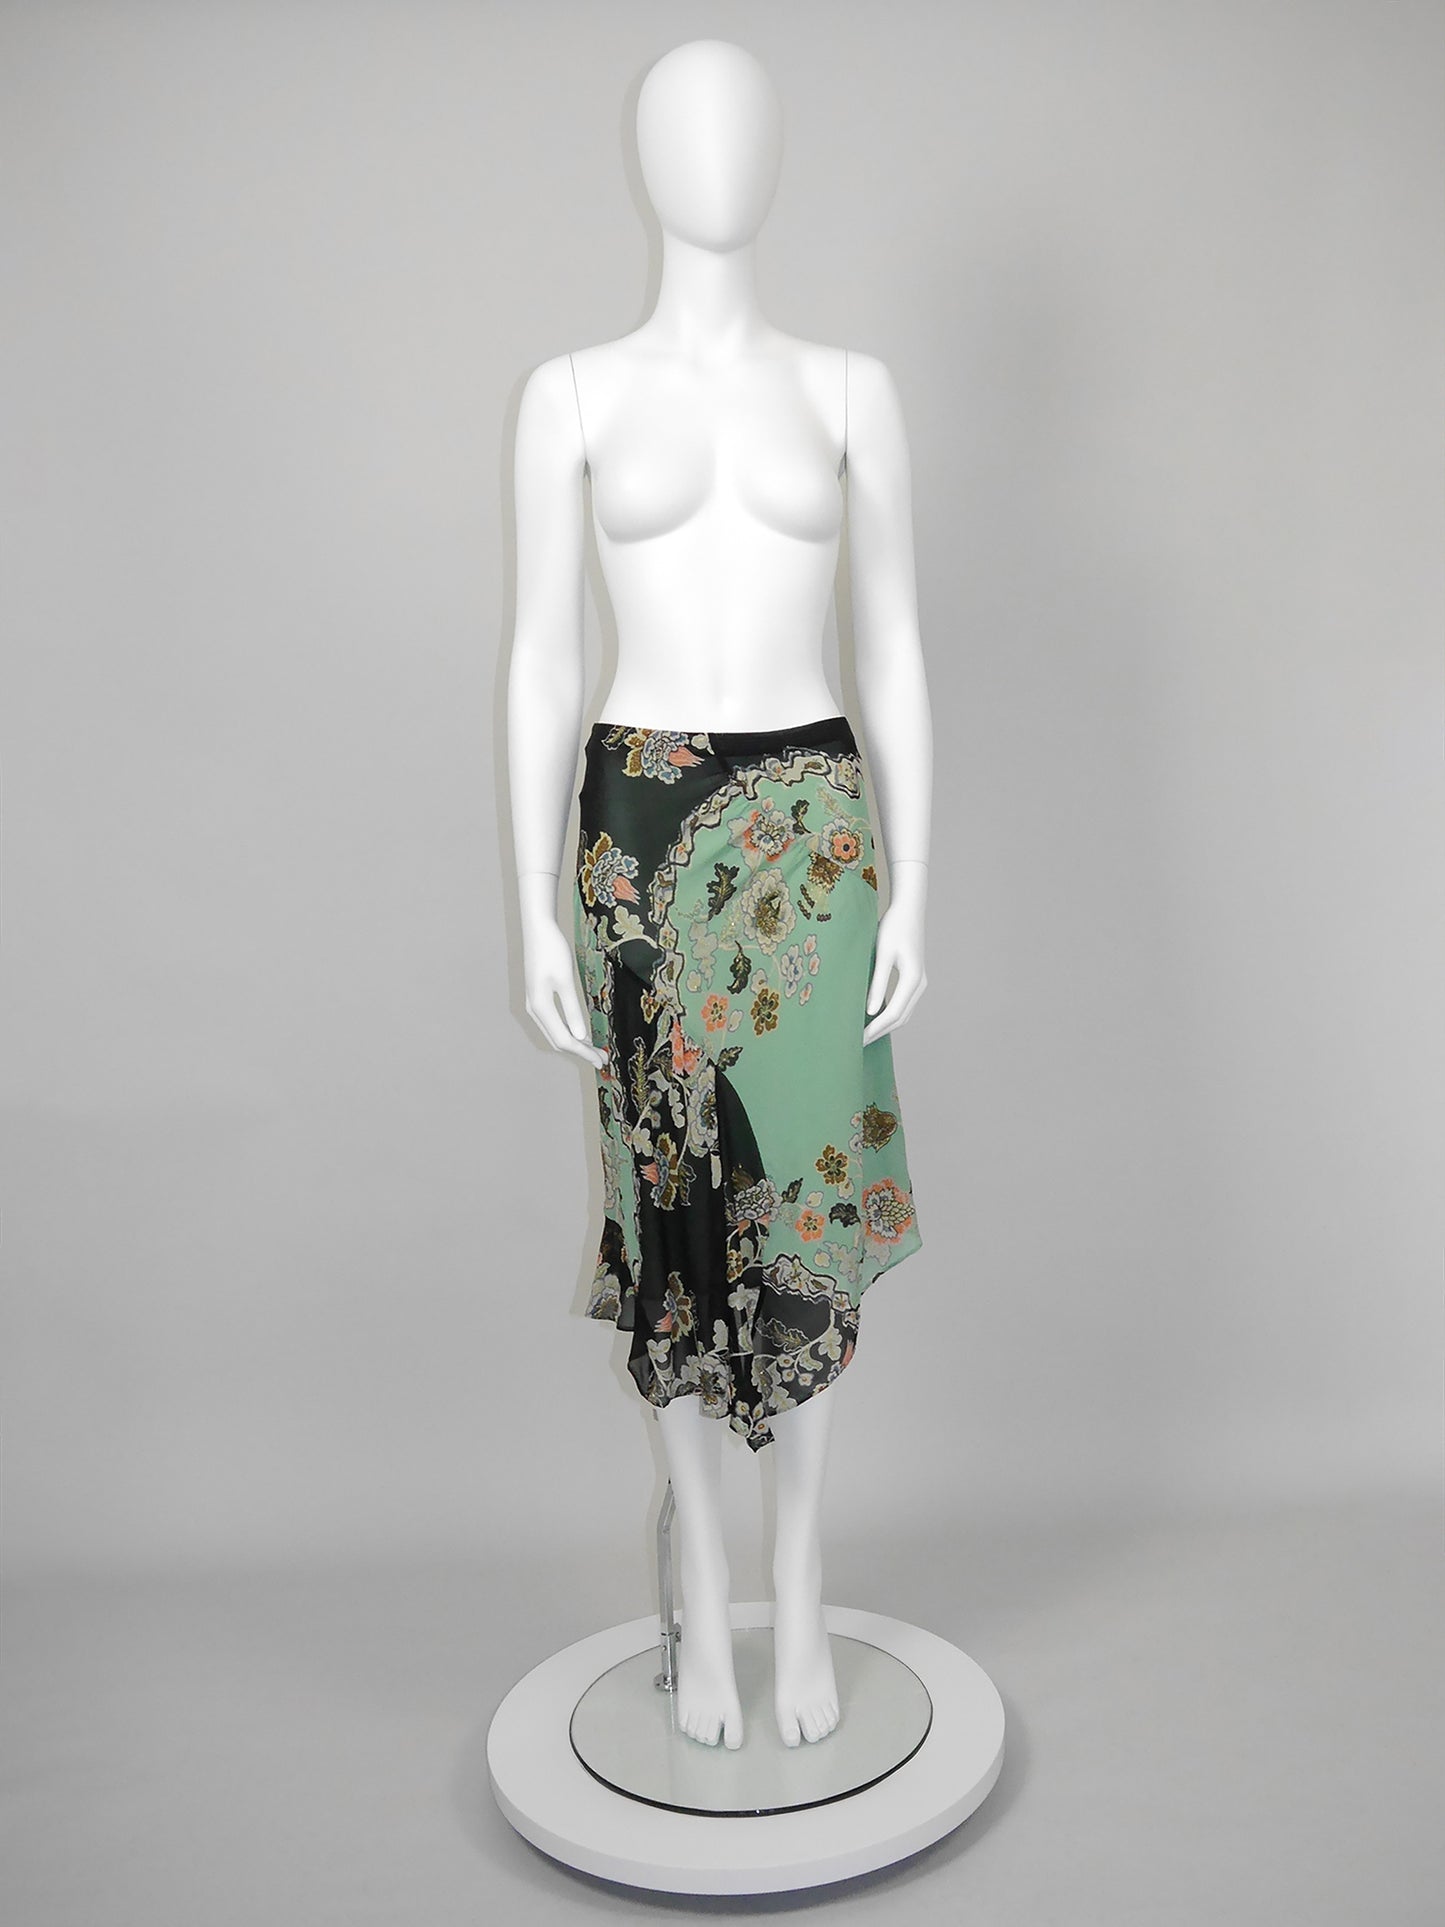 ROBERTO CAVALLI Spring 2003 Vintage Asian Floral Silk Skirt Size S